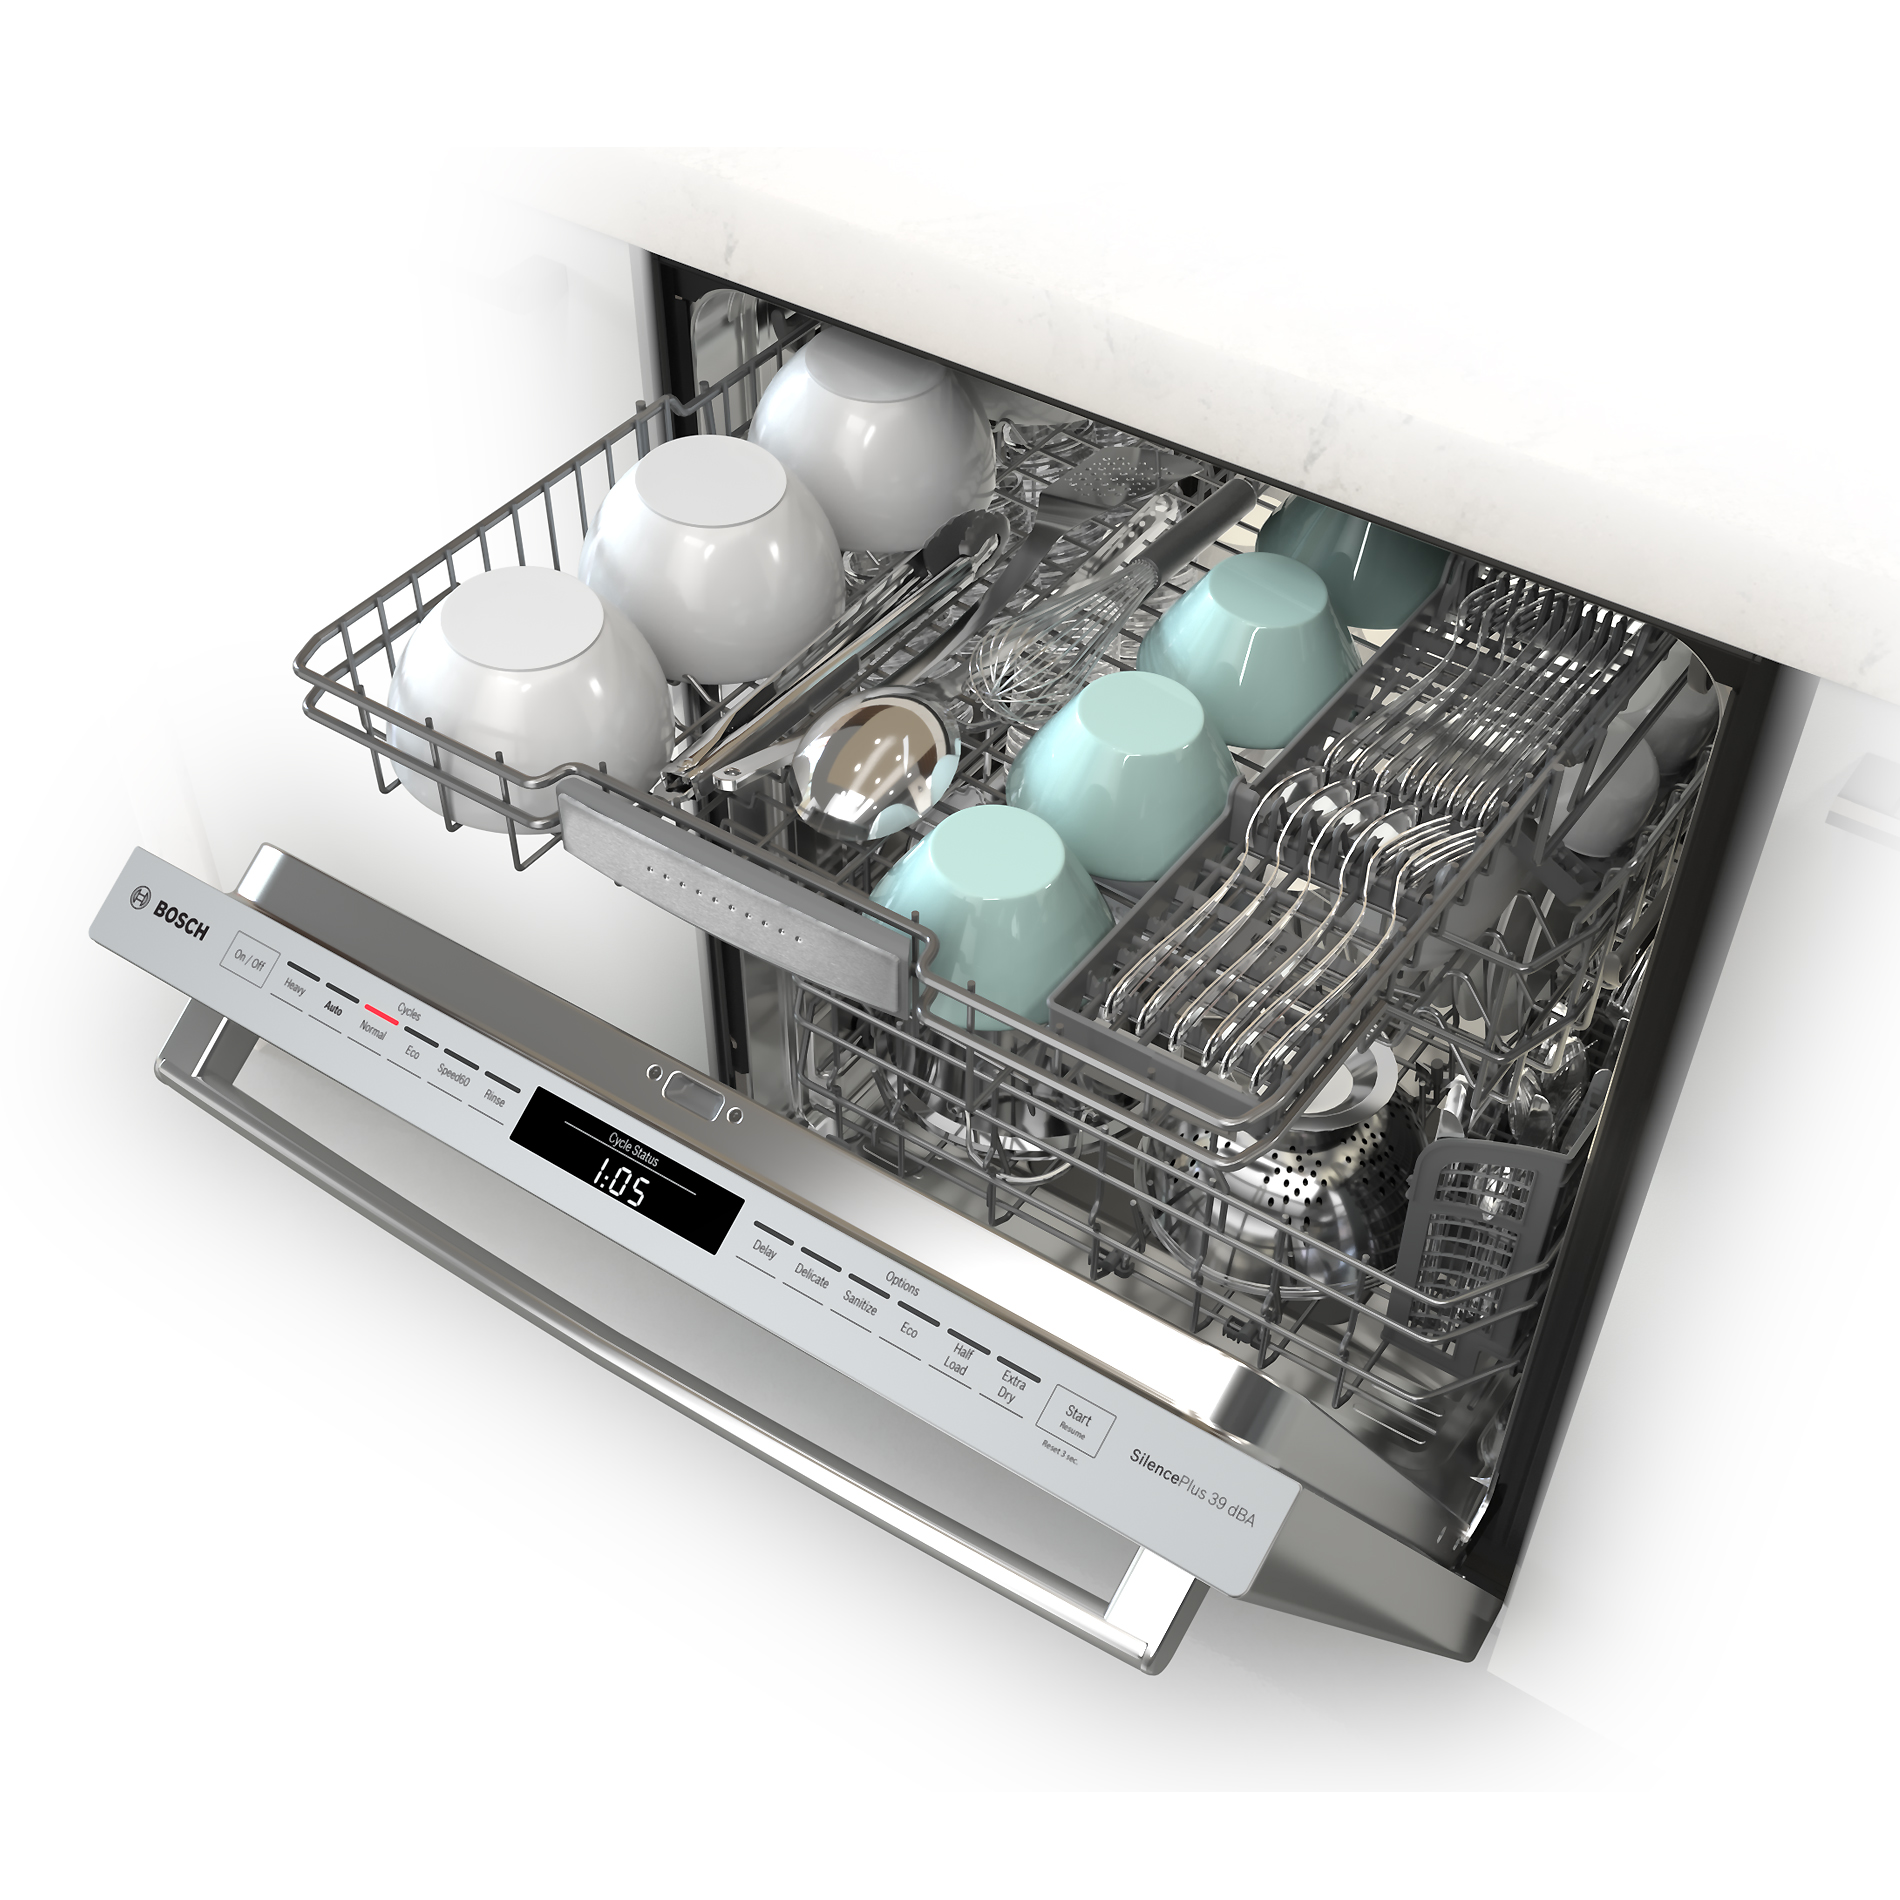 Bosch 800 dishwasher